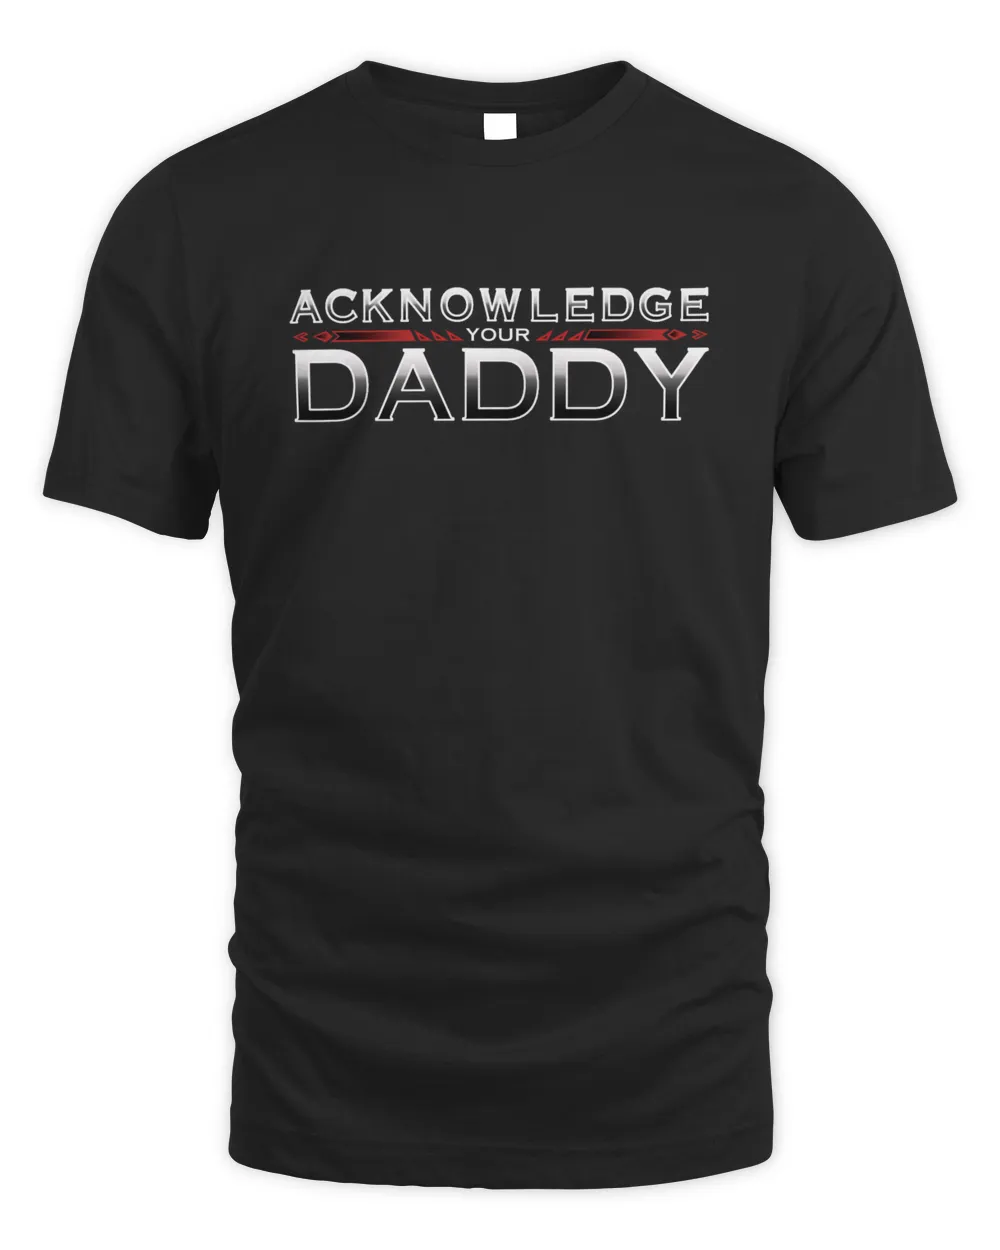 Dan Orlovsky Wearing Acknowledge Your Daddy Shirt